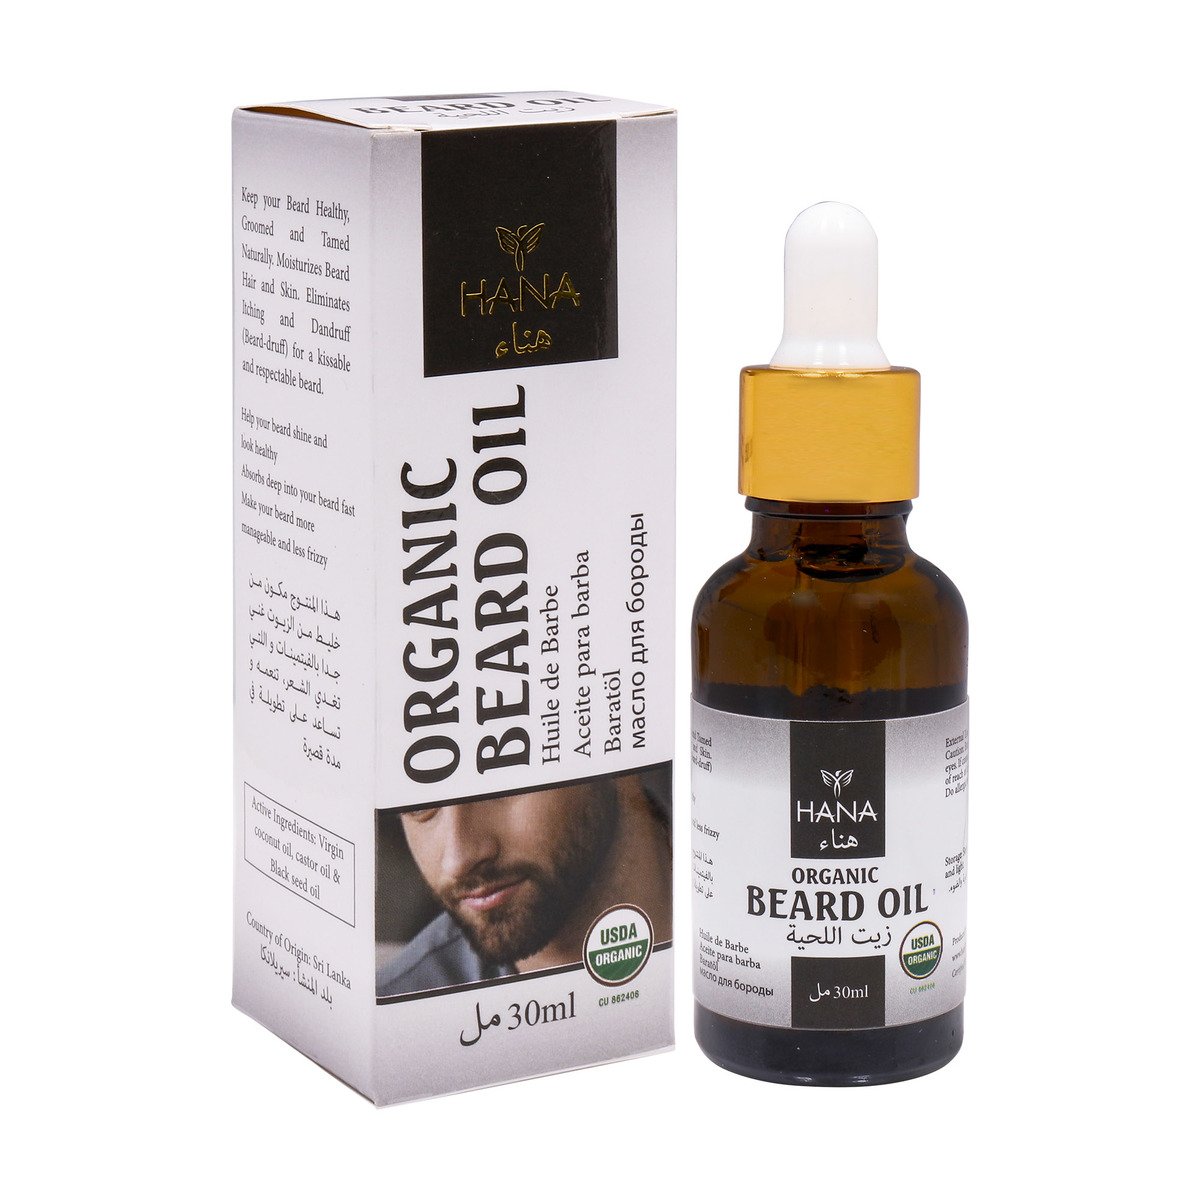 Hana Organic Beard Oil 30ml